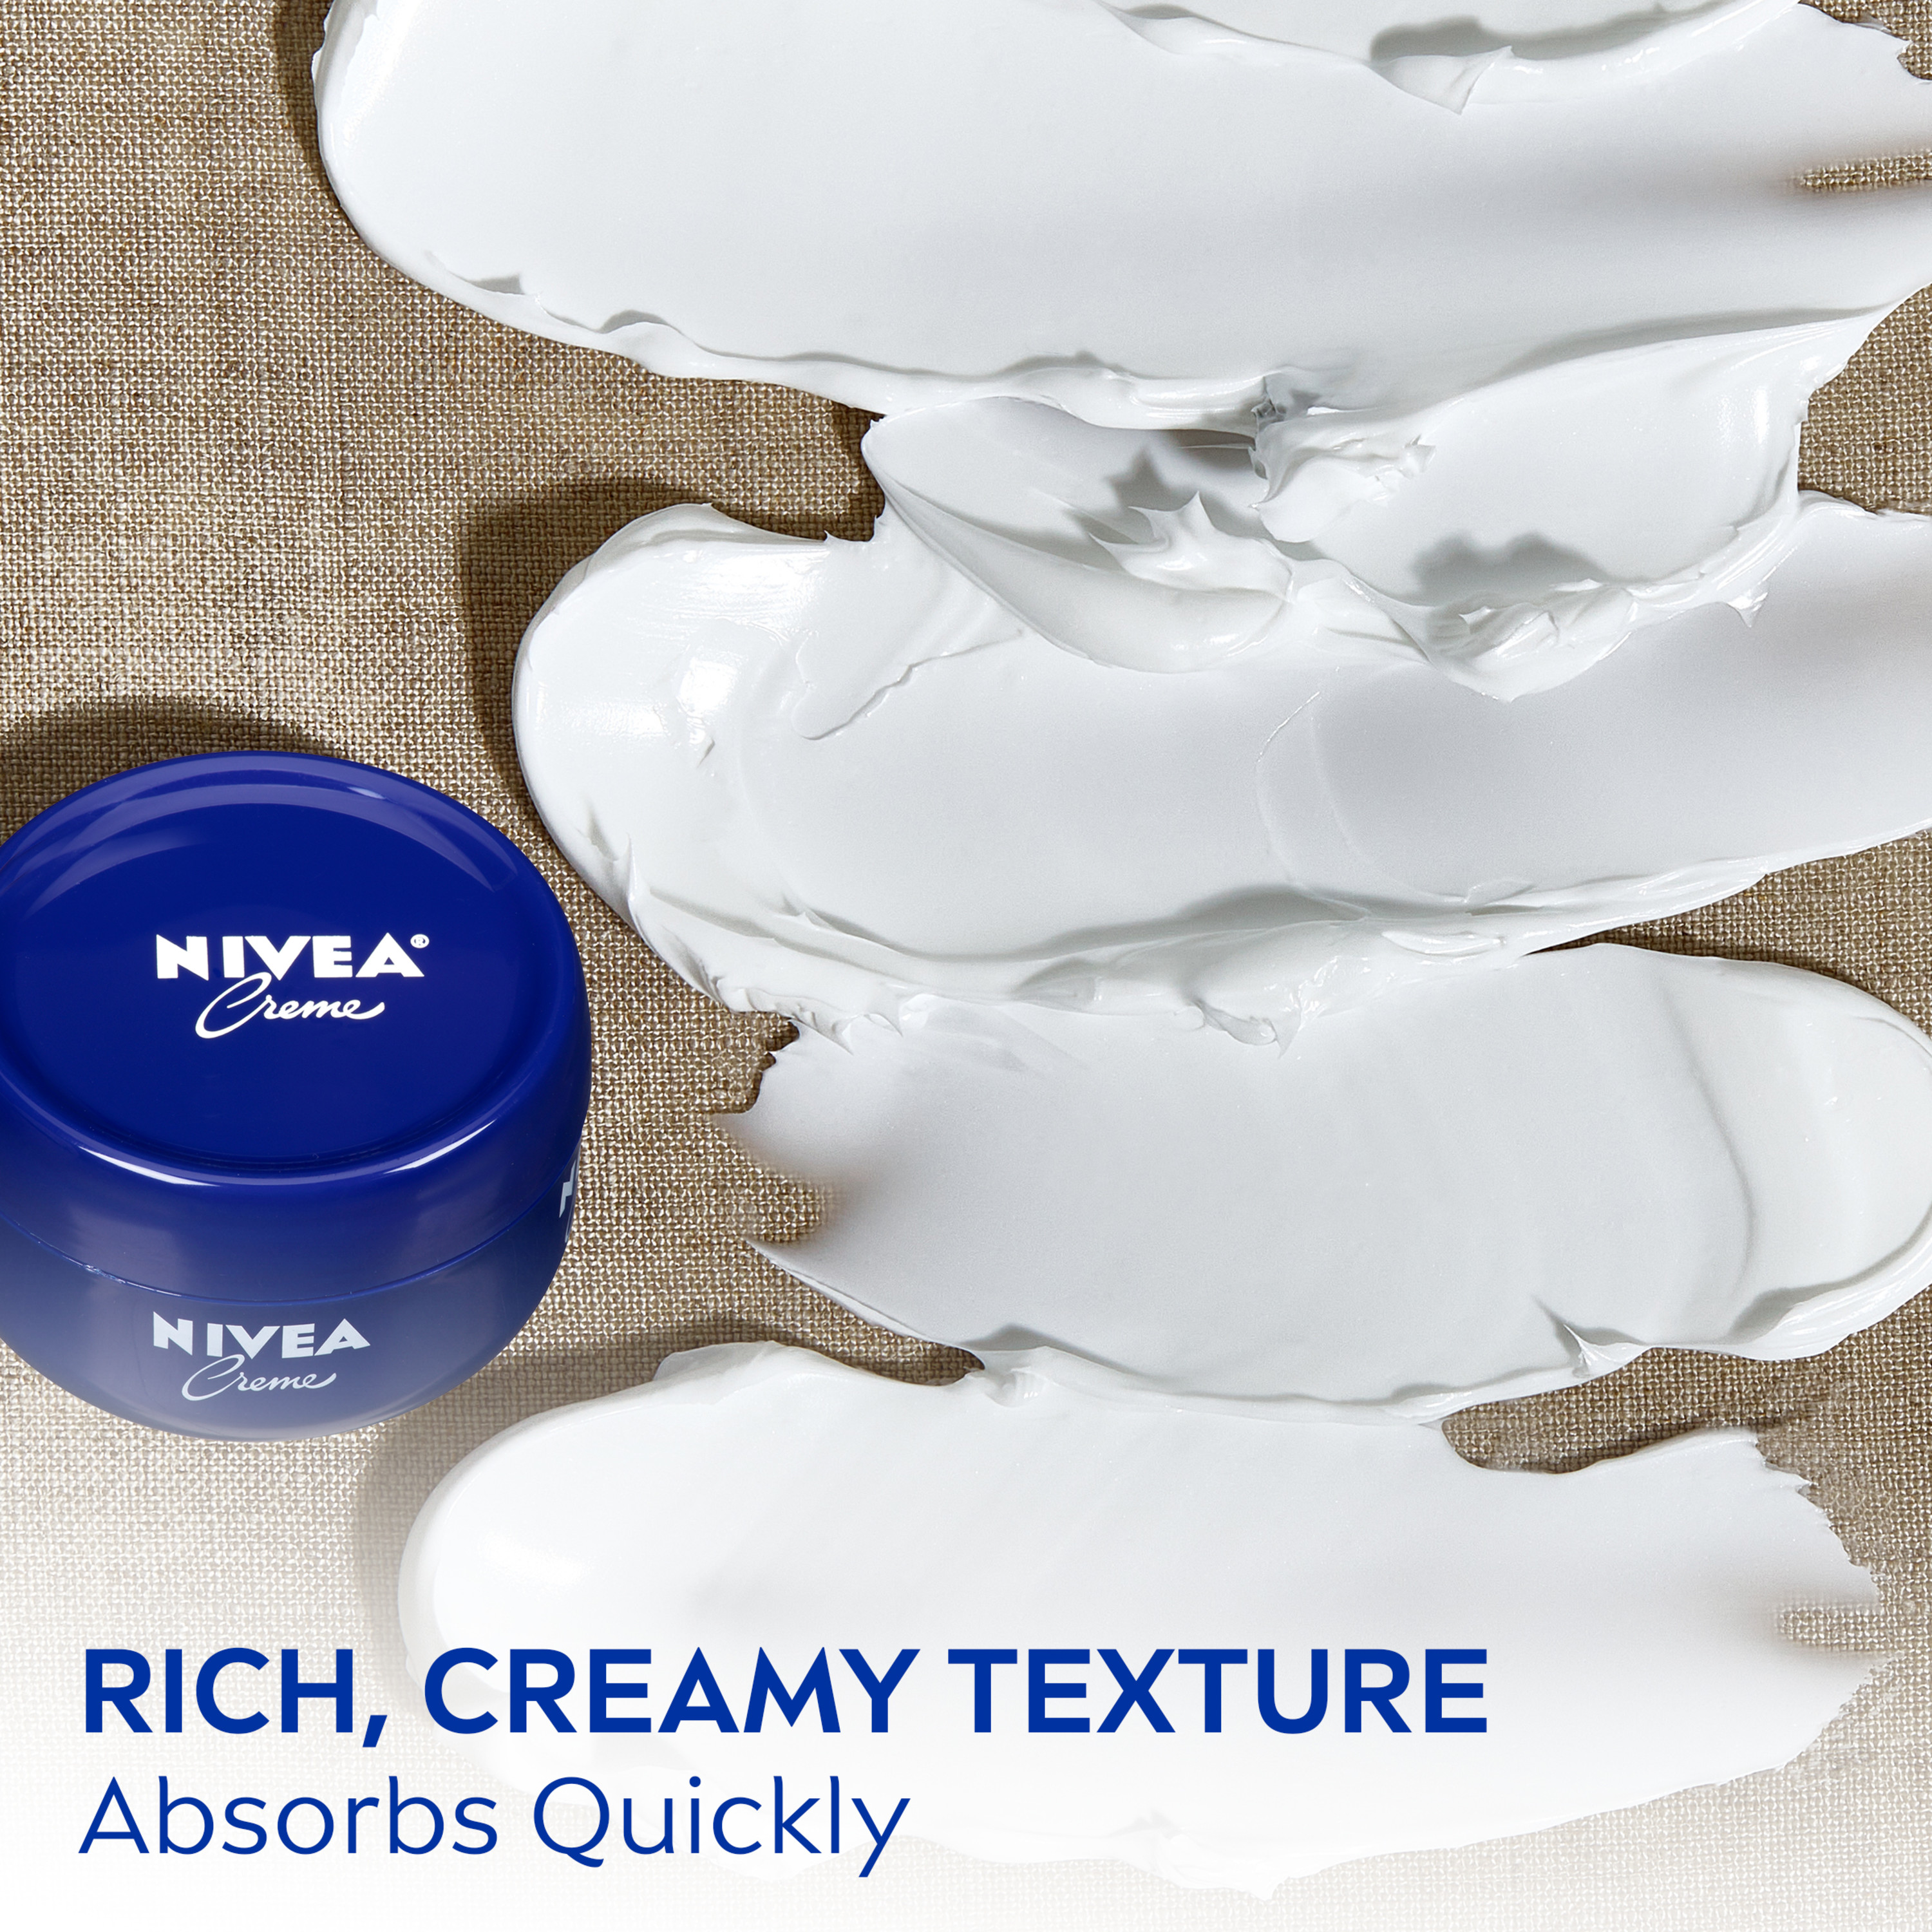 NIVEA Creme Body, Face and Hand Moisturizing Cream, 6.8 Oz Jar - image 5 of 14